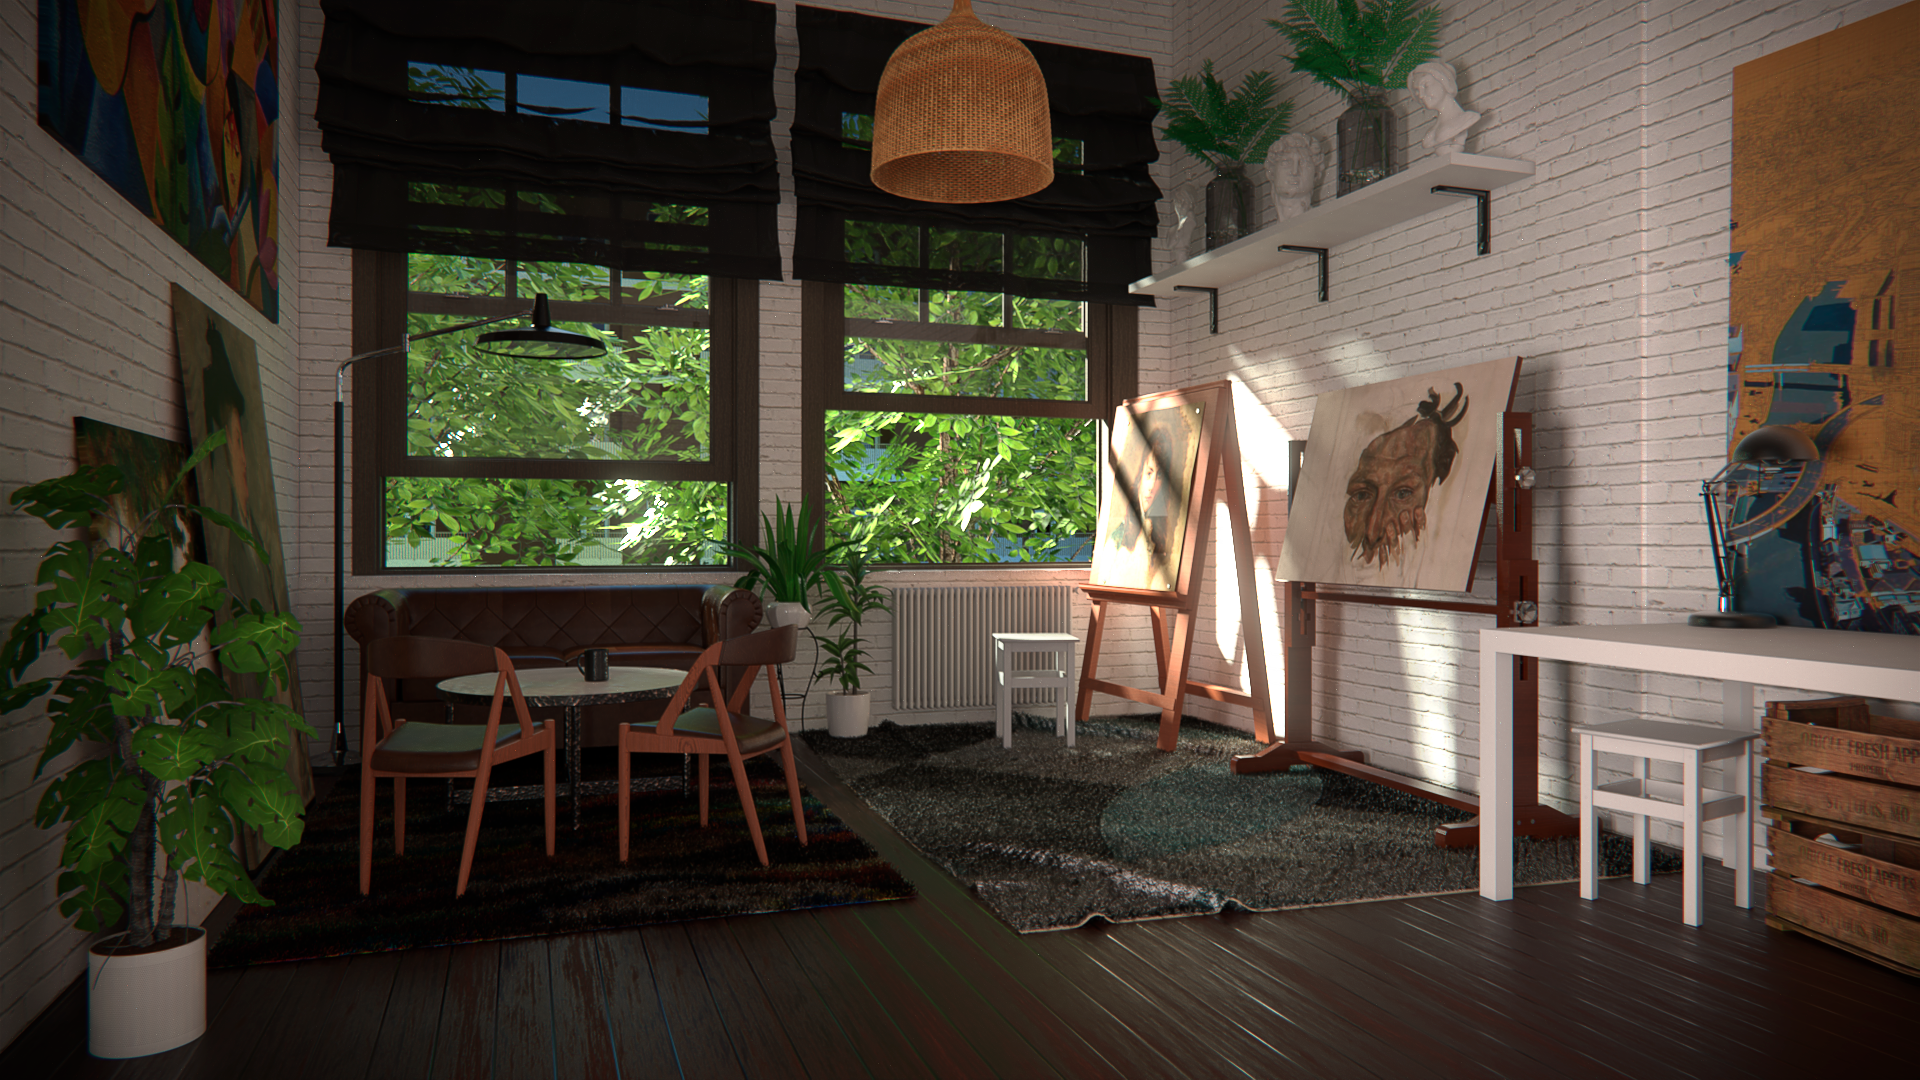 General 1920x1080 CGI digital art interior interior design painters room bricks